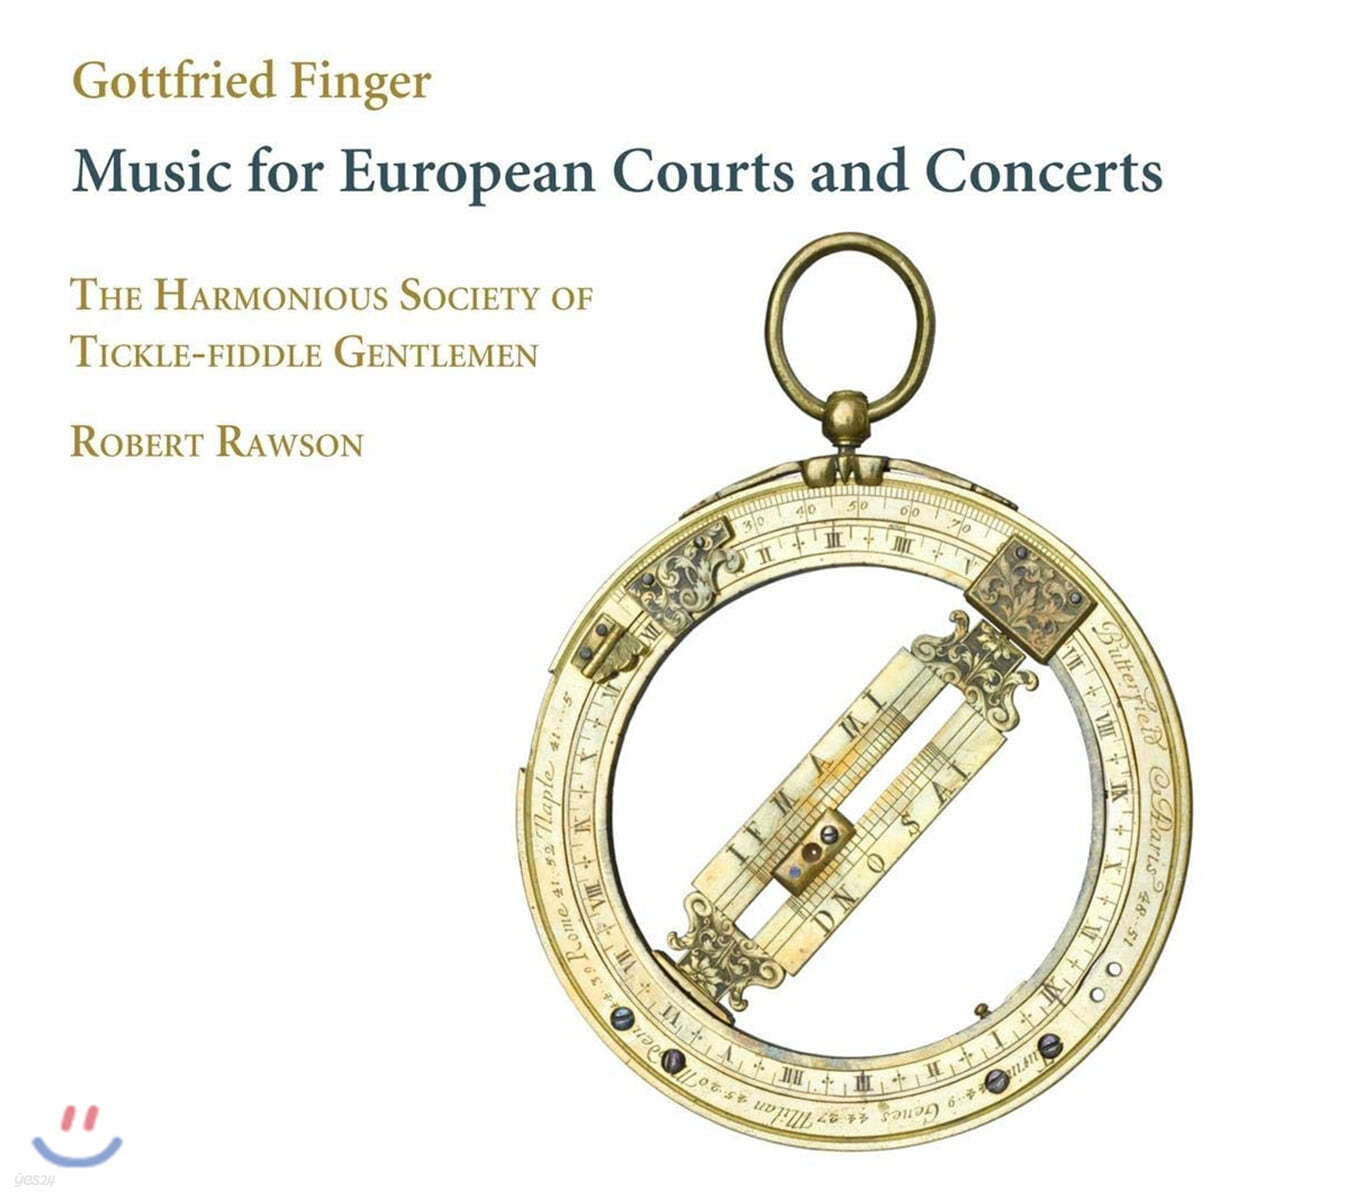 Robert Rawson 고트프리트 핑거: 유럽 왕궁과 콘서트를 위한 음악 (Gottfried Finger: Music for European Courts and Concerts)